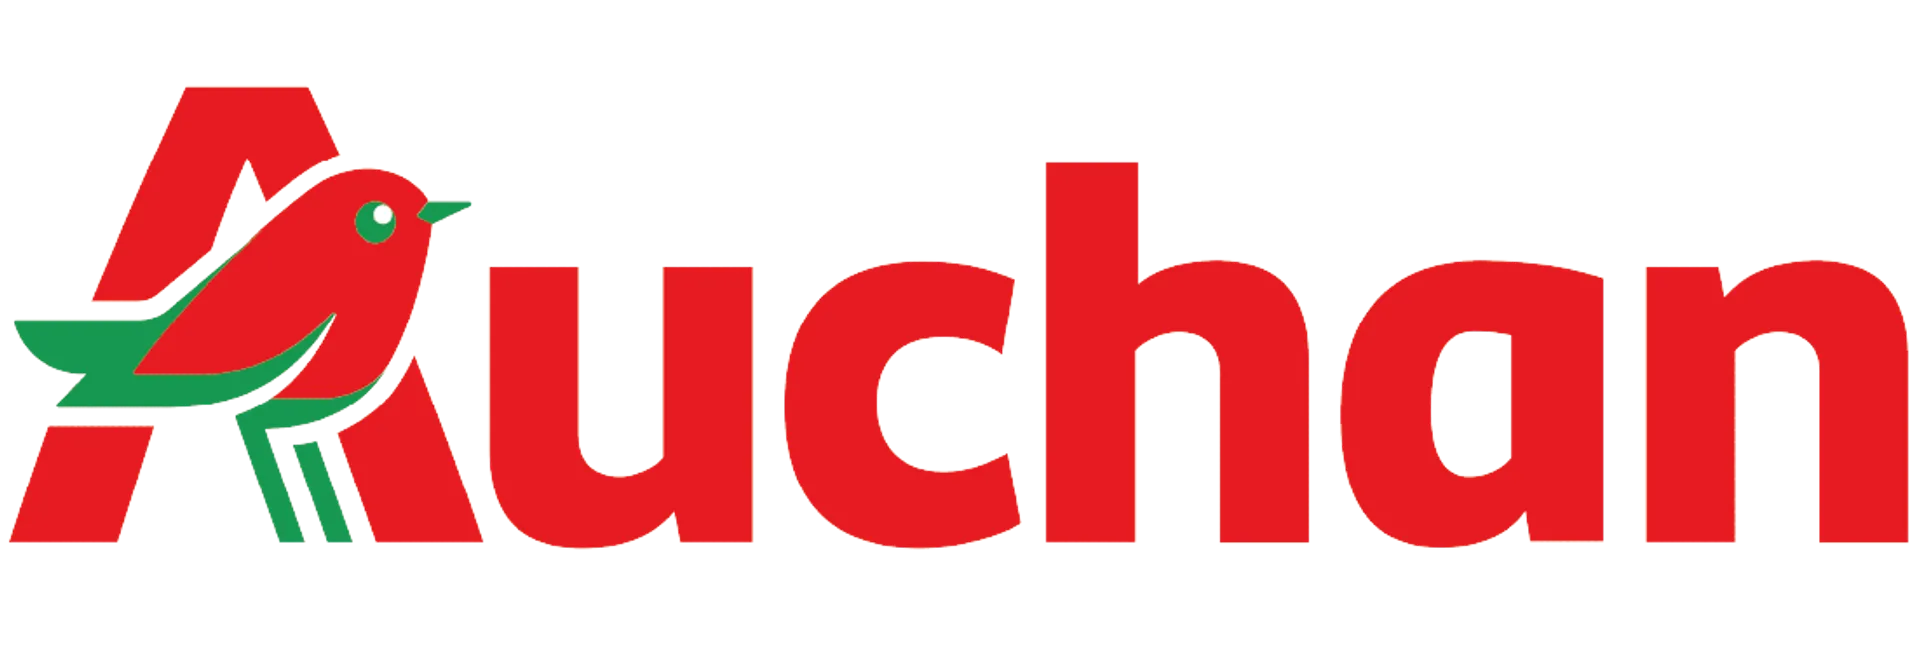 AUCHAN logo